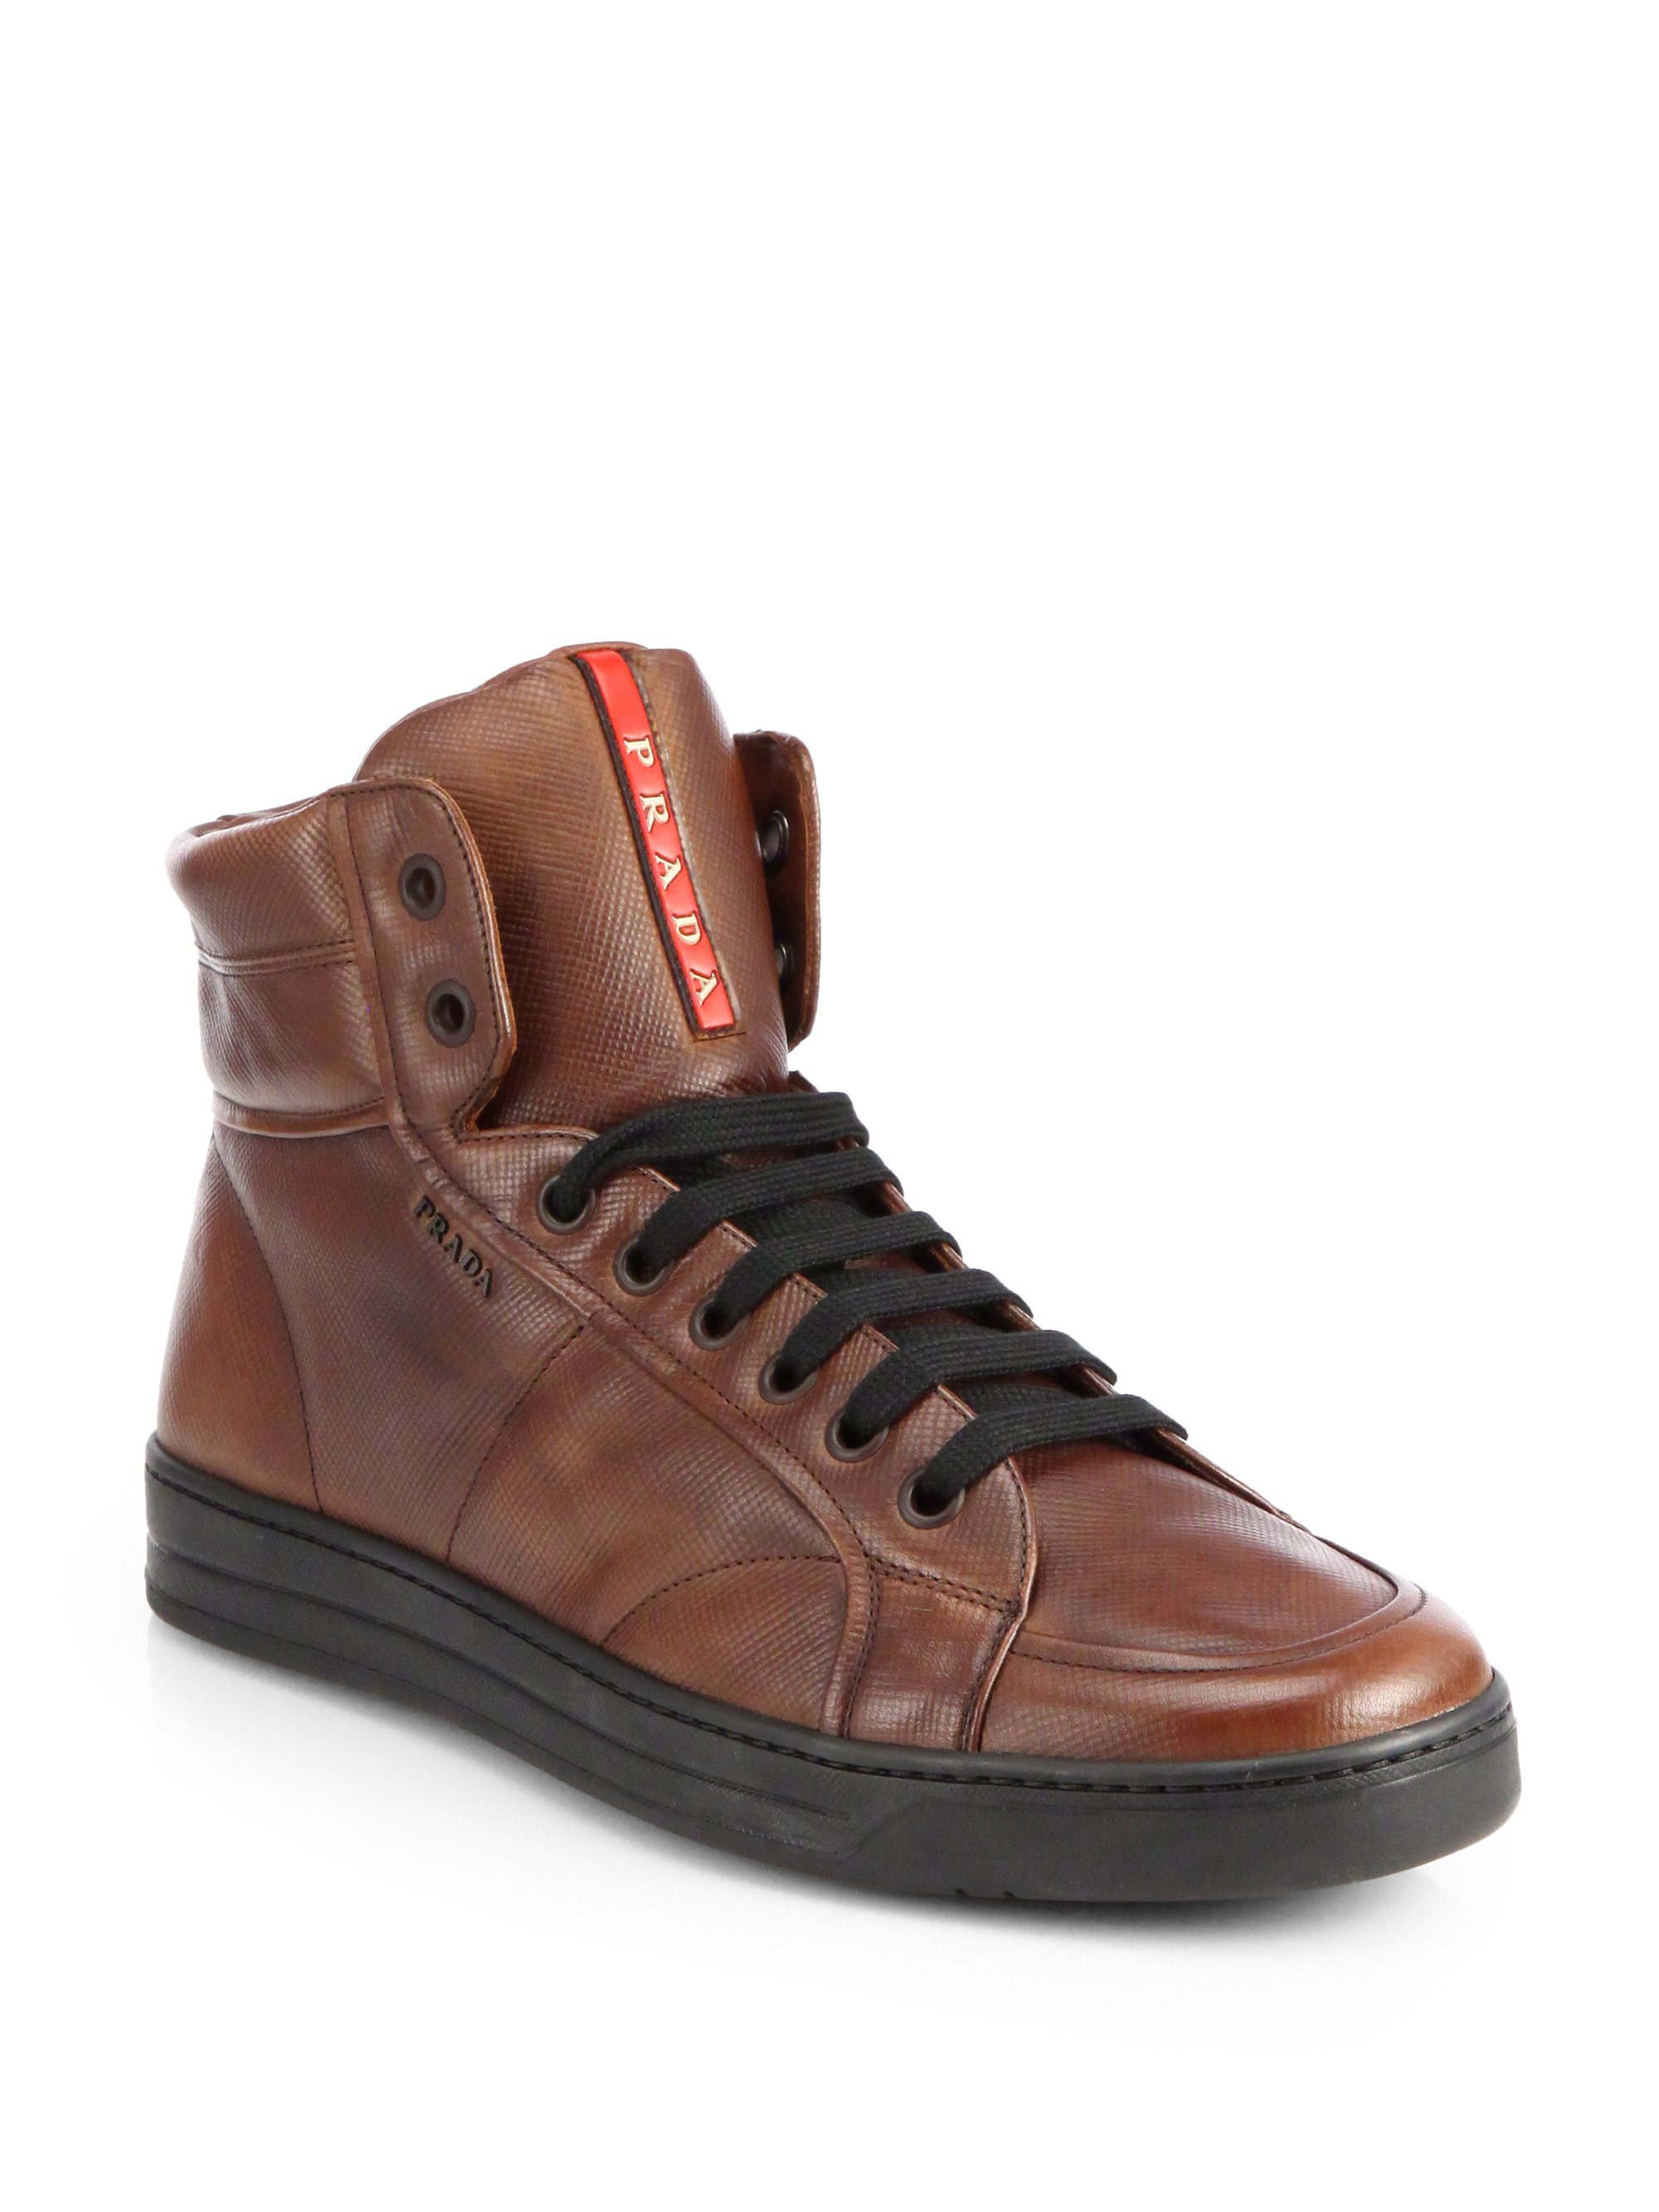 Lyst - Prada Leather Hightop Sneakers in Brown for Men